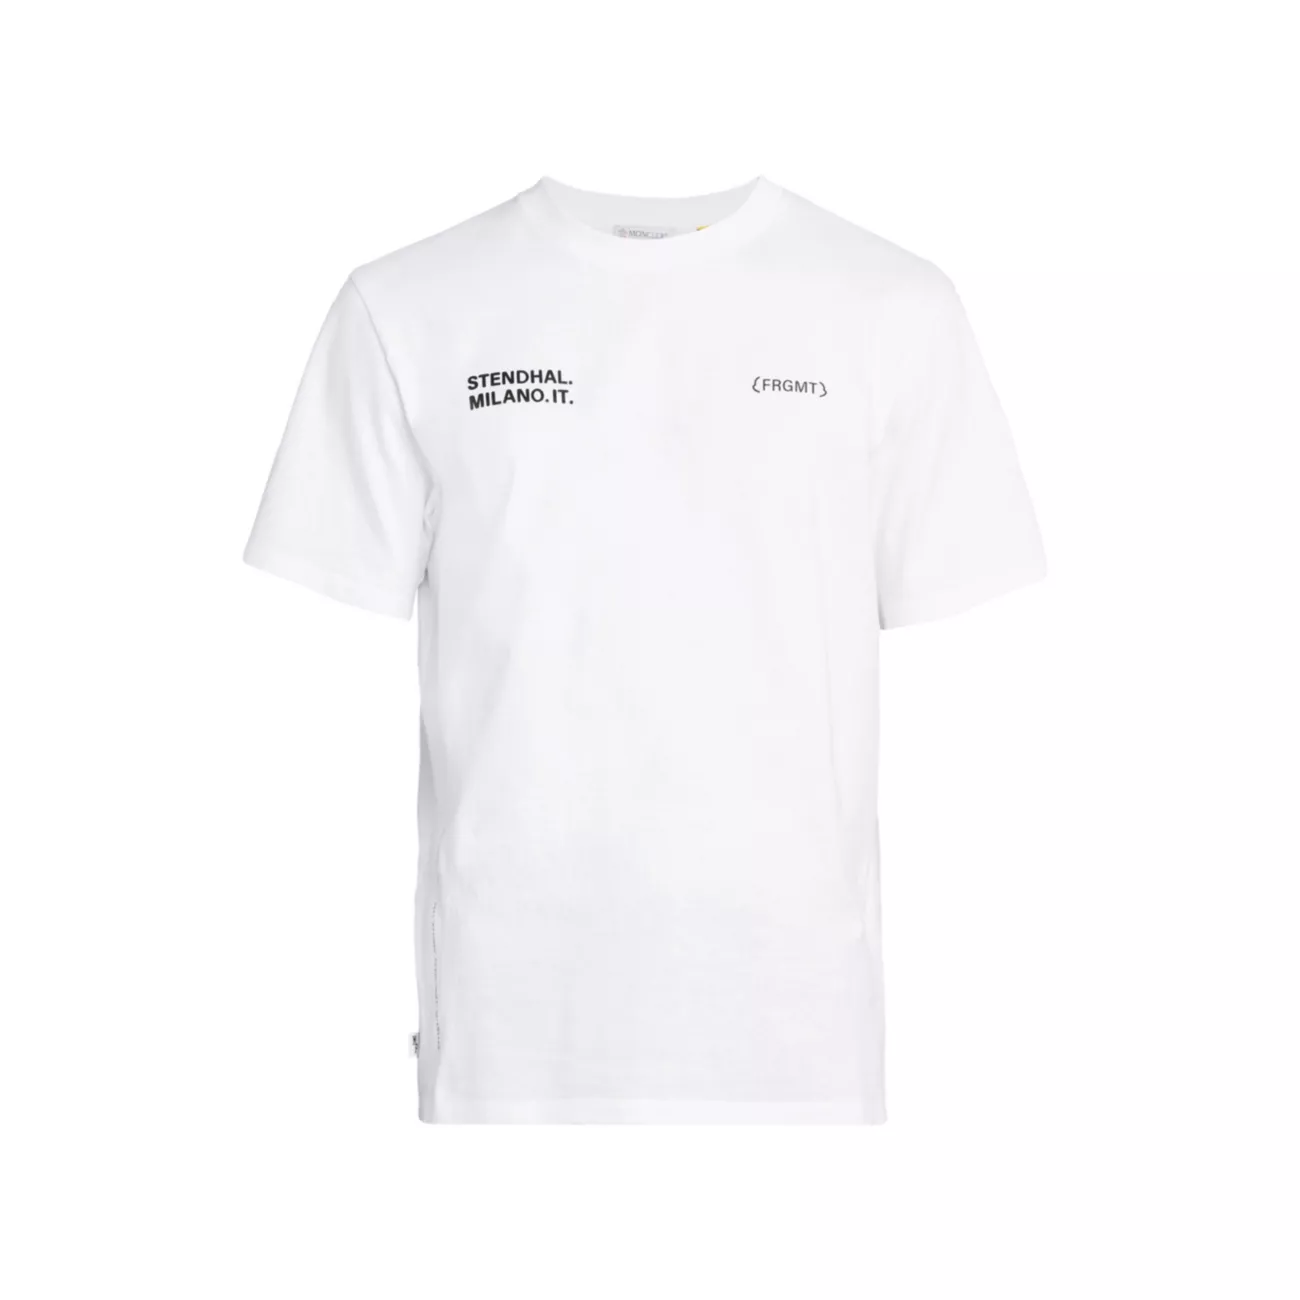 7 Moncler FRGMT футболка с короткими рукавами Moncler Genius